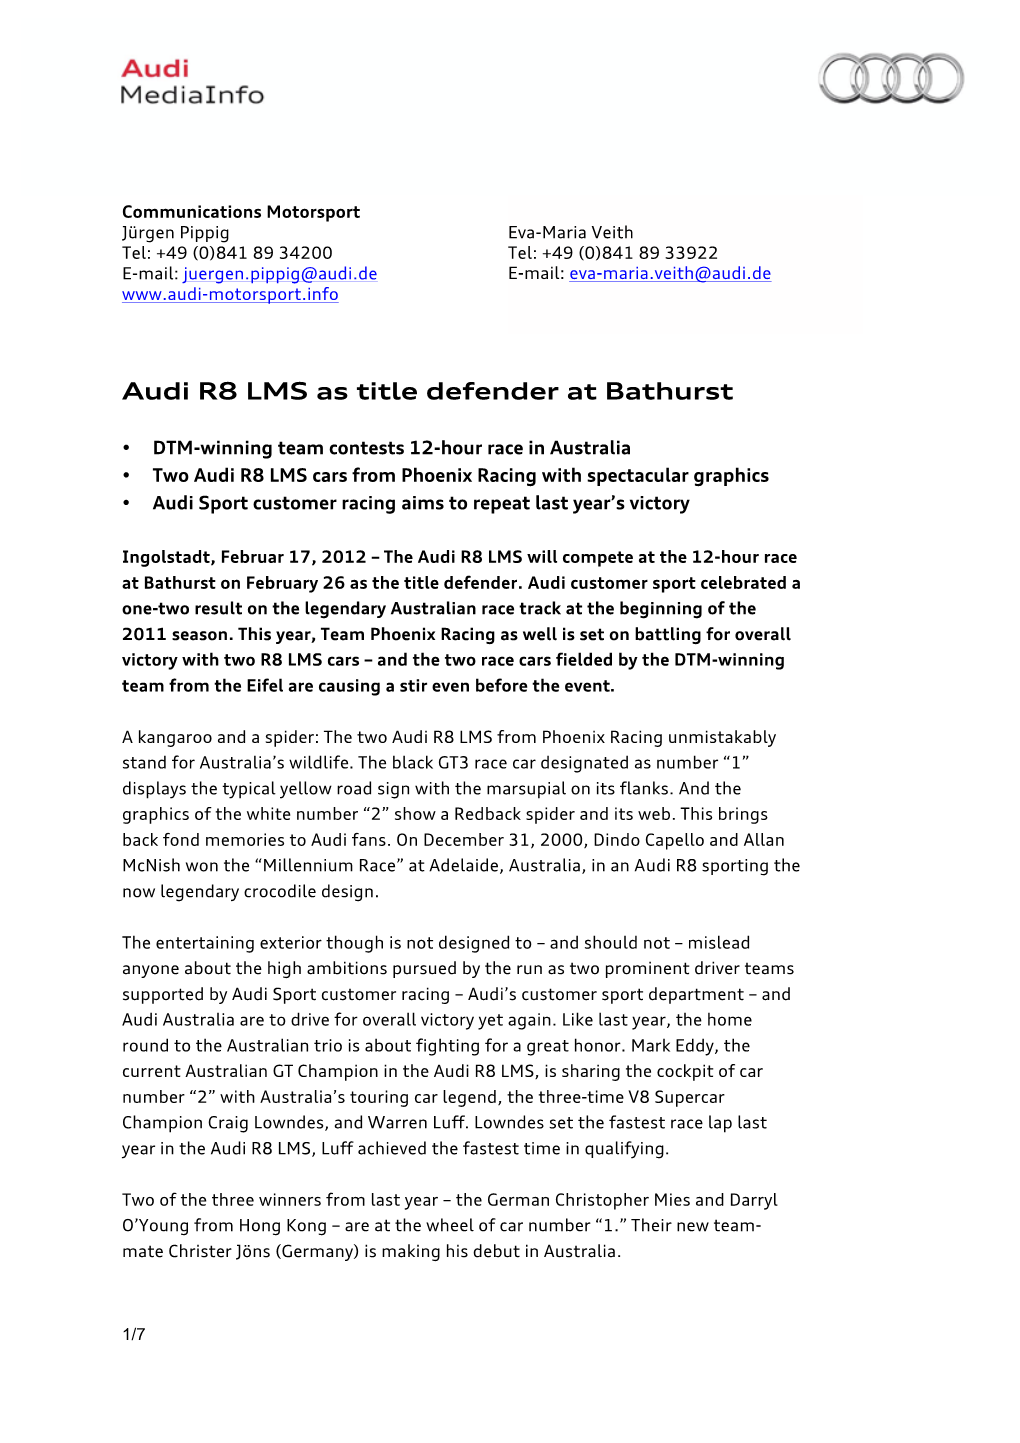 Audi R8 LMS As Title Defender at Bathurst